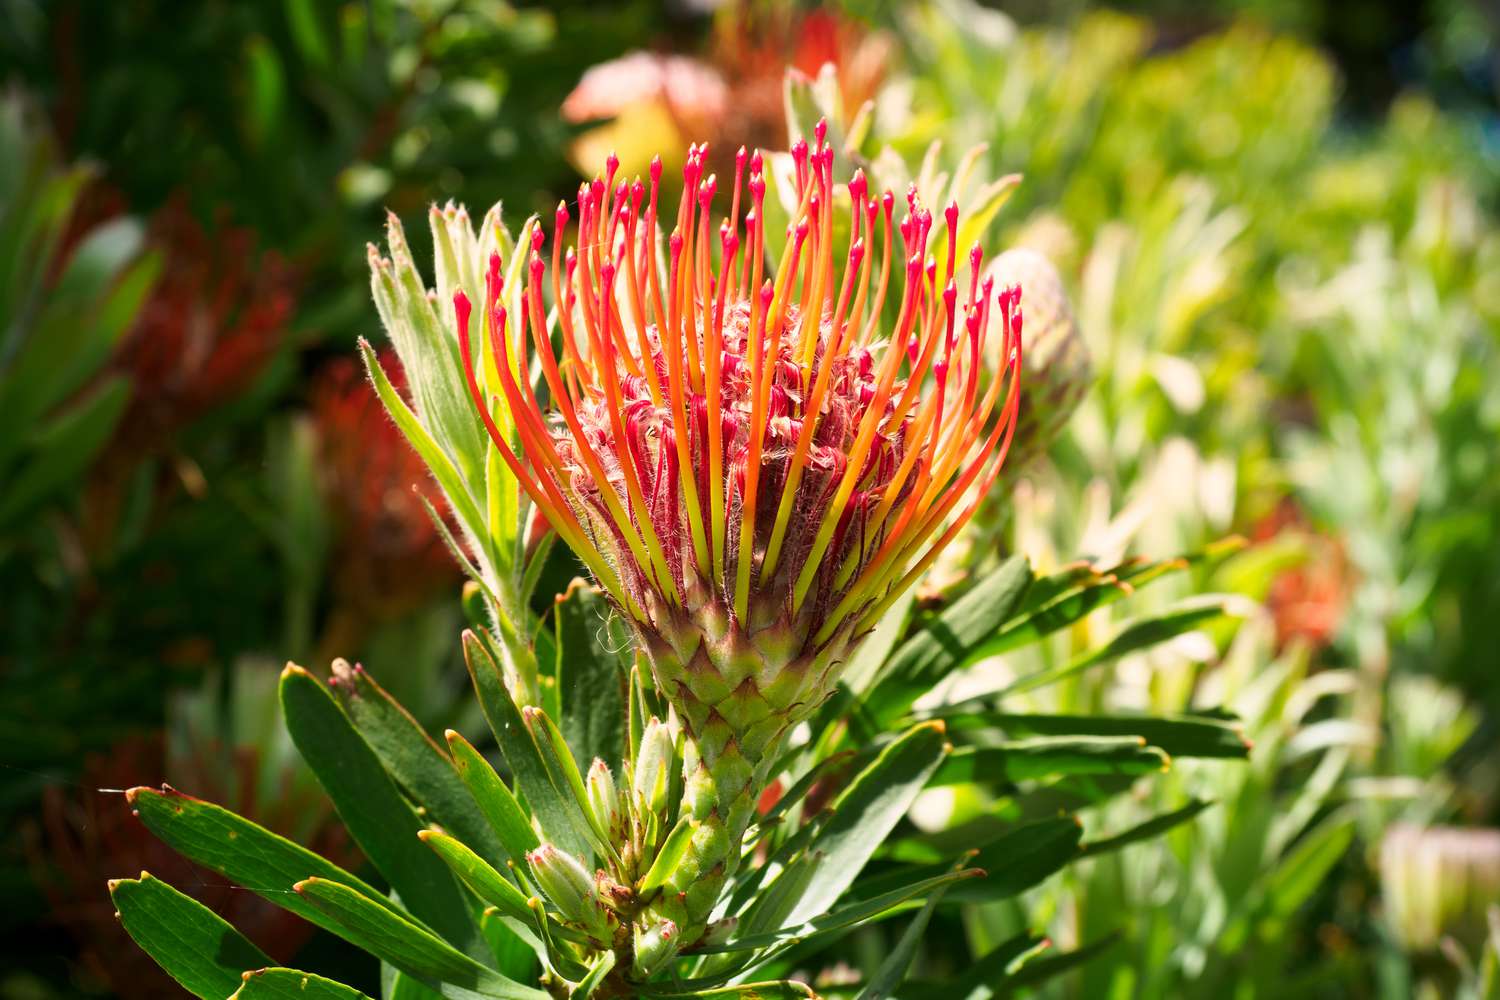 Protea-Pflanze mit orange-roten, kelchförmigen Hüllblättern am Blütenstiel